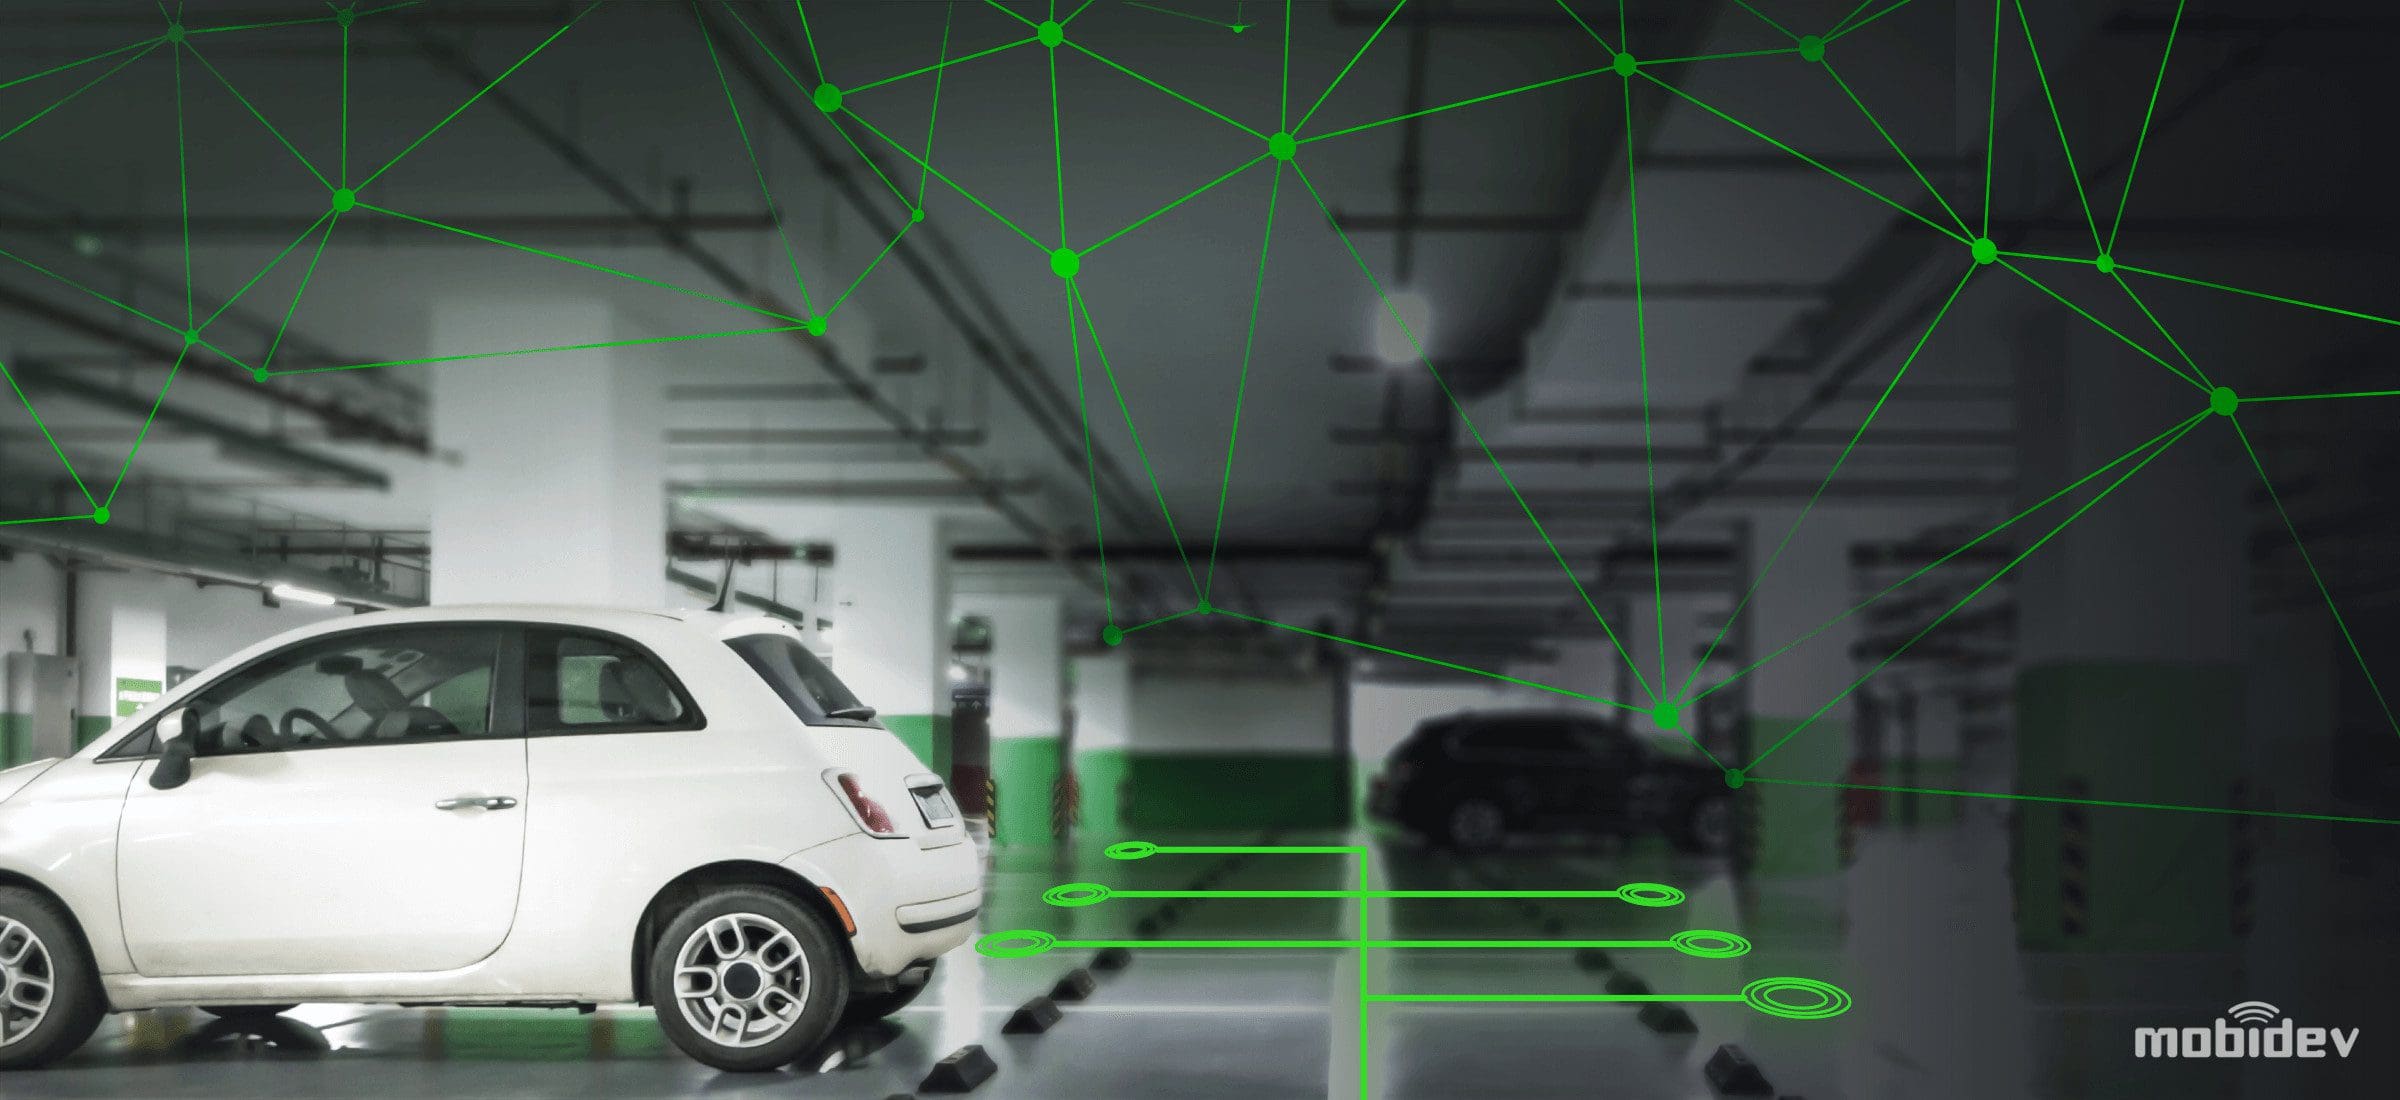 IoT-based Smart Parking System Development